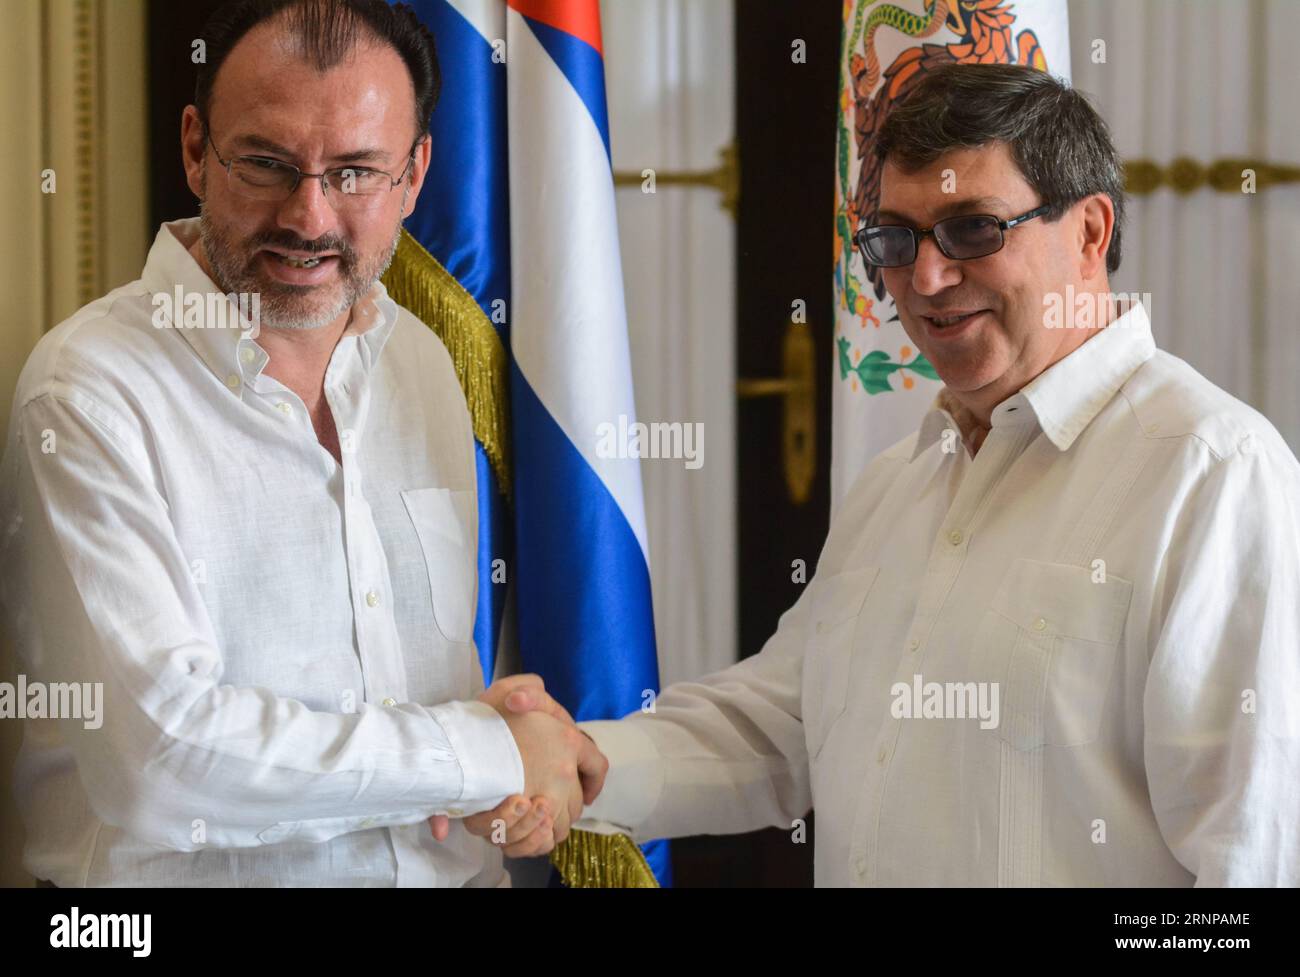 (170819) -- HAVANA, Aug. 19, 2017 -- Cuba s Foreign Minister Bruno Rodriguez(R) shakes hands with his Mexican counterpart Luis Videgaray(L) at the headquarters of the Cuban Foreign Ministry in Havana, Cuba, on Aug. 18, 2017. Joaquin Hernandez) (ma) (da) (yk) CUBA-HAVANA-MEXICO-POLITICS-VISIT e JoaquinxHernandez PUBLICATIONxNOTxINxCHN   Havana Aug 19 2017 Cuba S Foreign Ministers Bruno Rodriguez r Shakes Hands With His MEXICAN Part Luis Videgaray l AT The Headquarters of The Cuban Foreign Ministry in Havana Cuba ON Aug 18 2017 Joaquin Hernandez MA there YK Cuba Havana Mexico POLITICS Visit e Jo Stock Photo